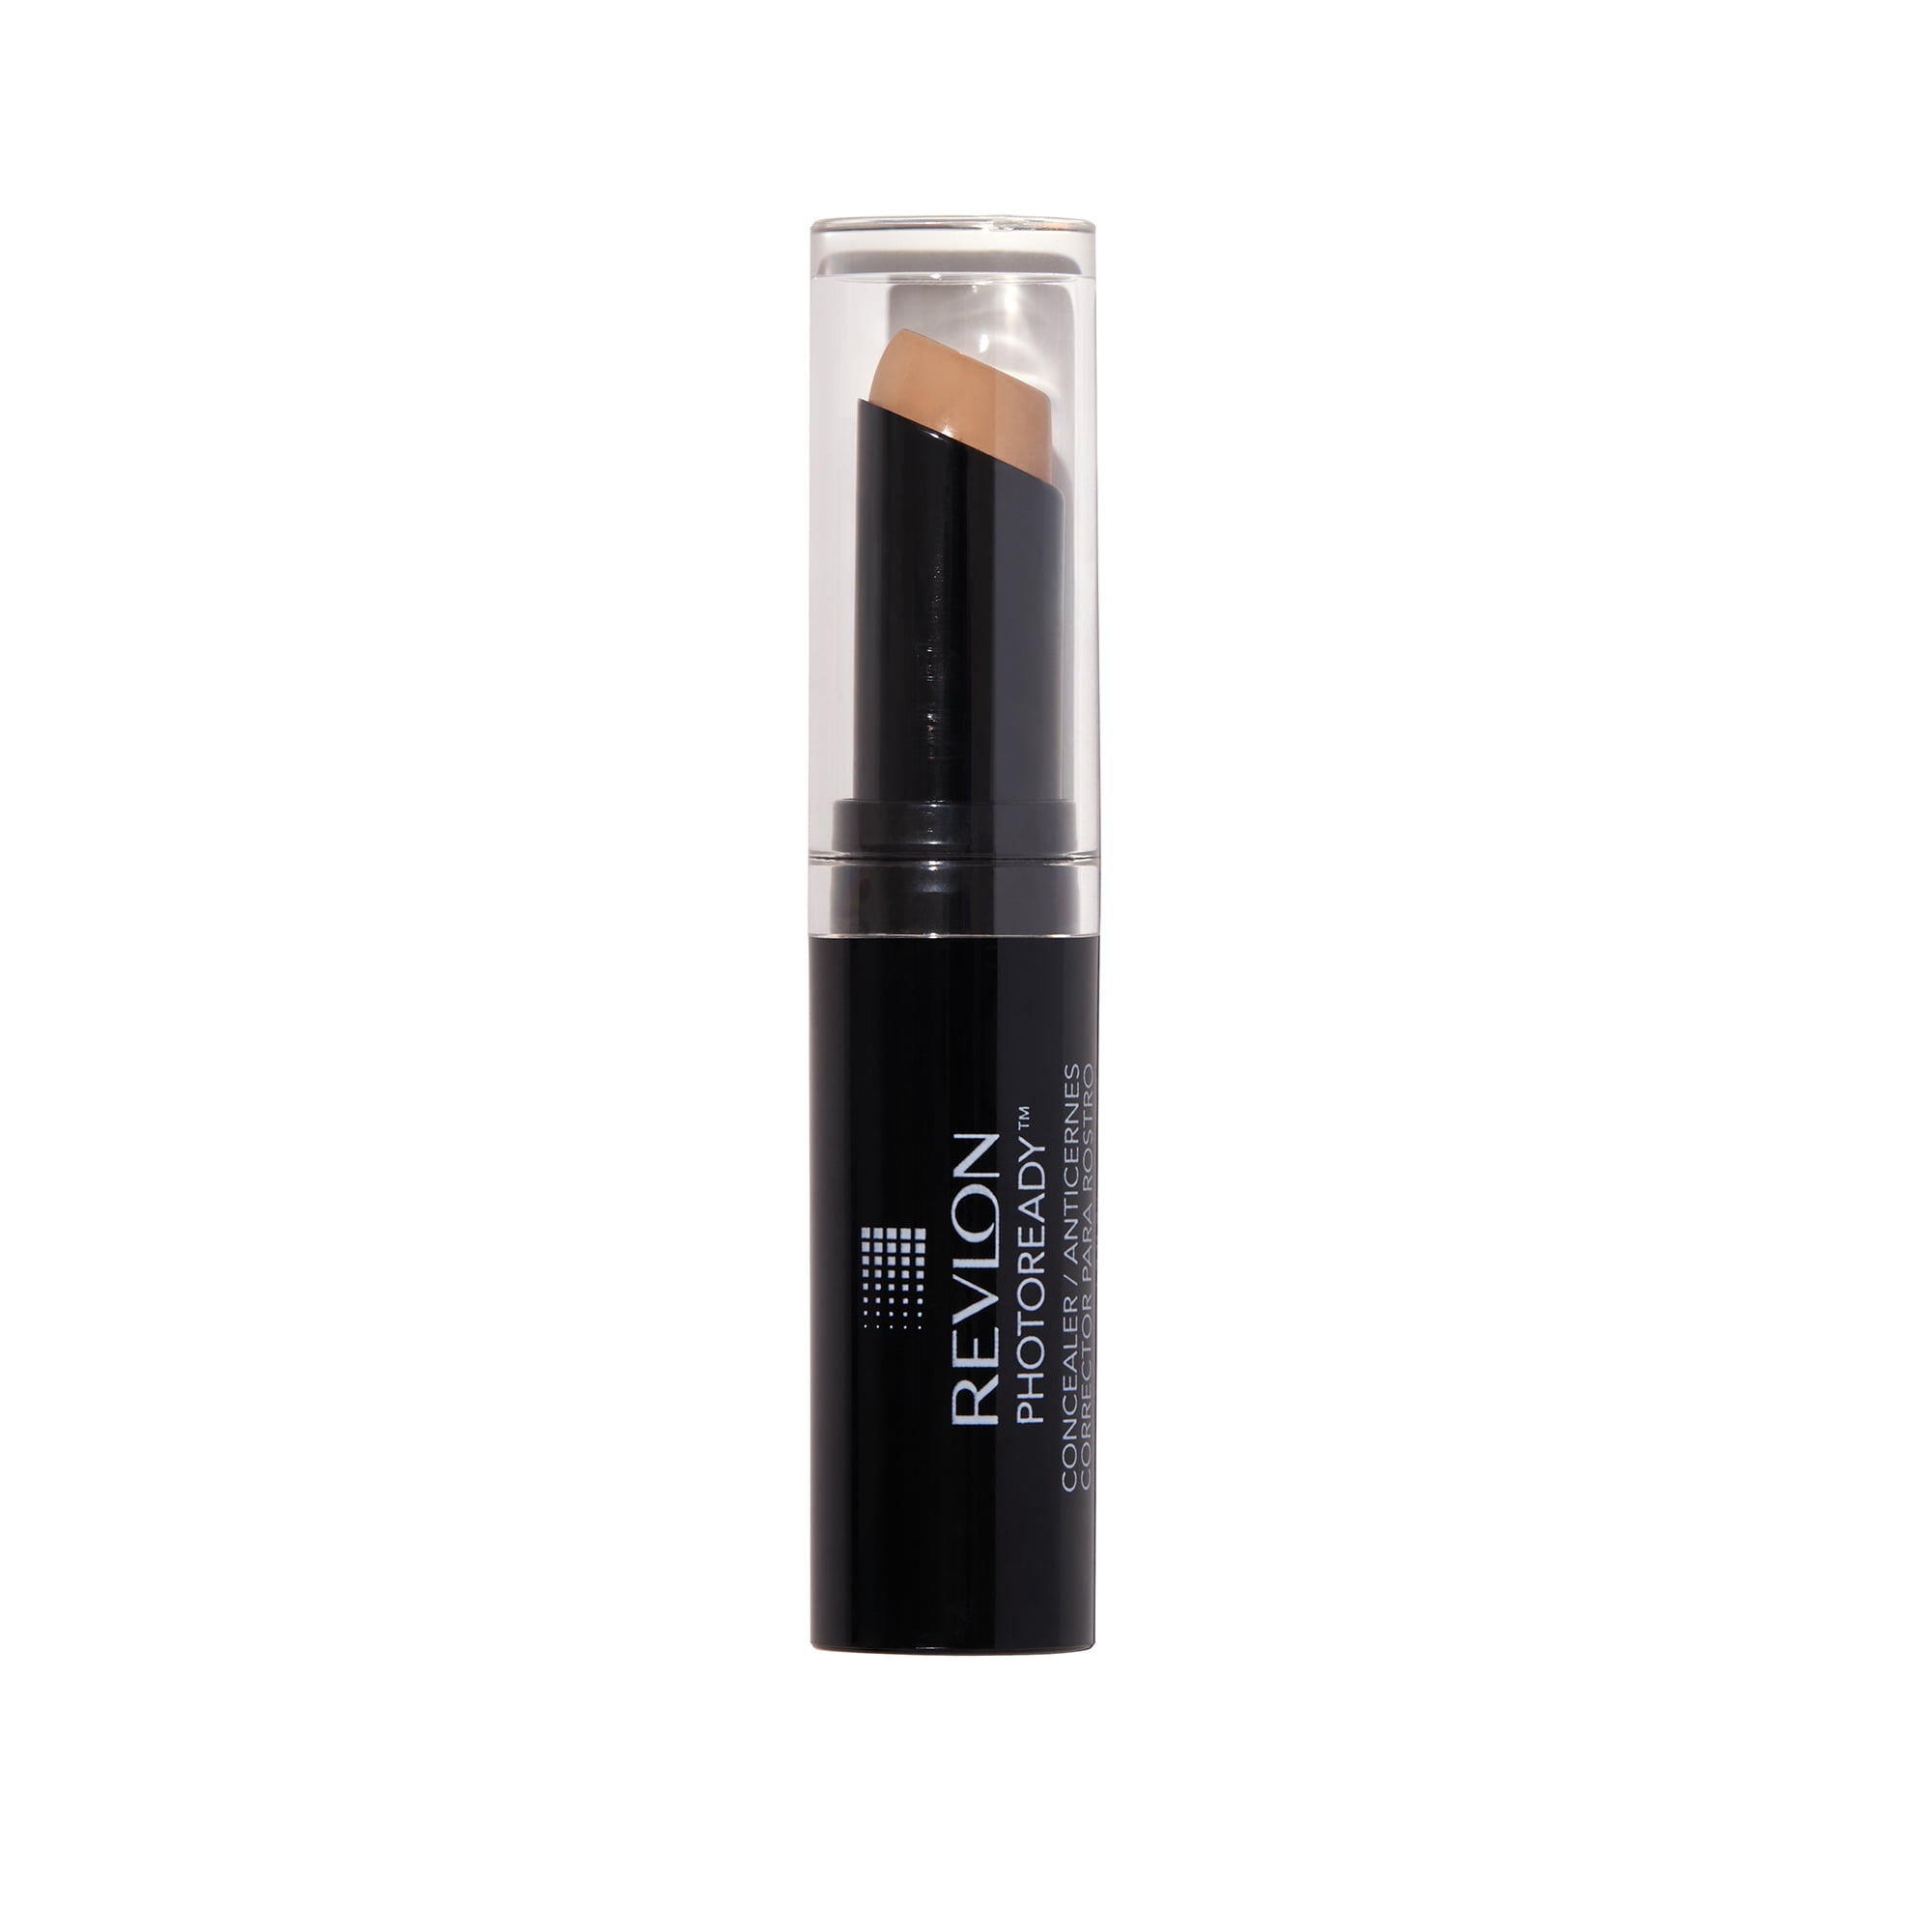 Revlon PhotoReady Concealer Stick, Creamy Medium Coverage Color Correcting Face Makeup, 005 Medium Deep, 0.11 oz